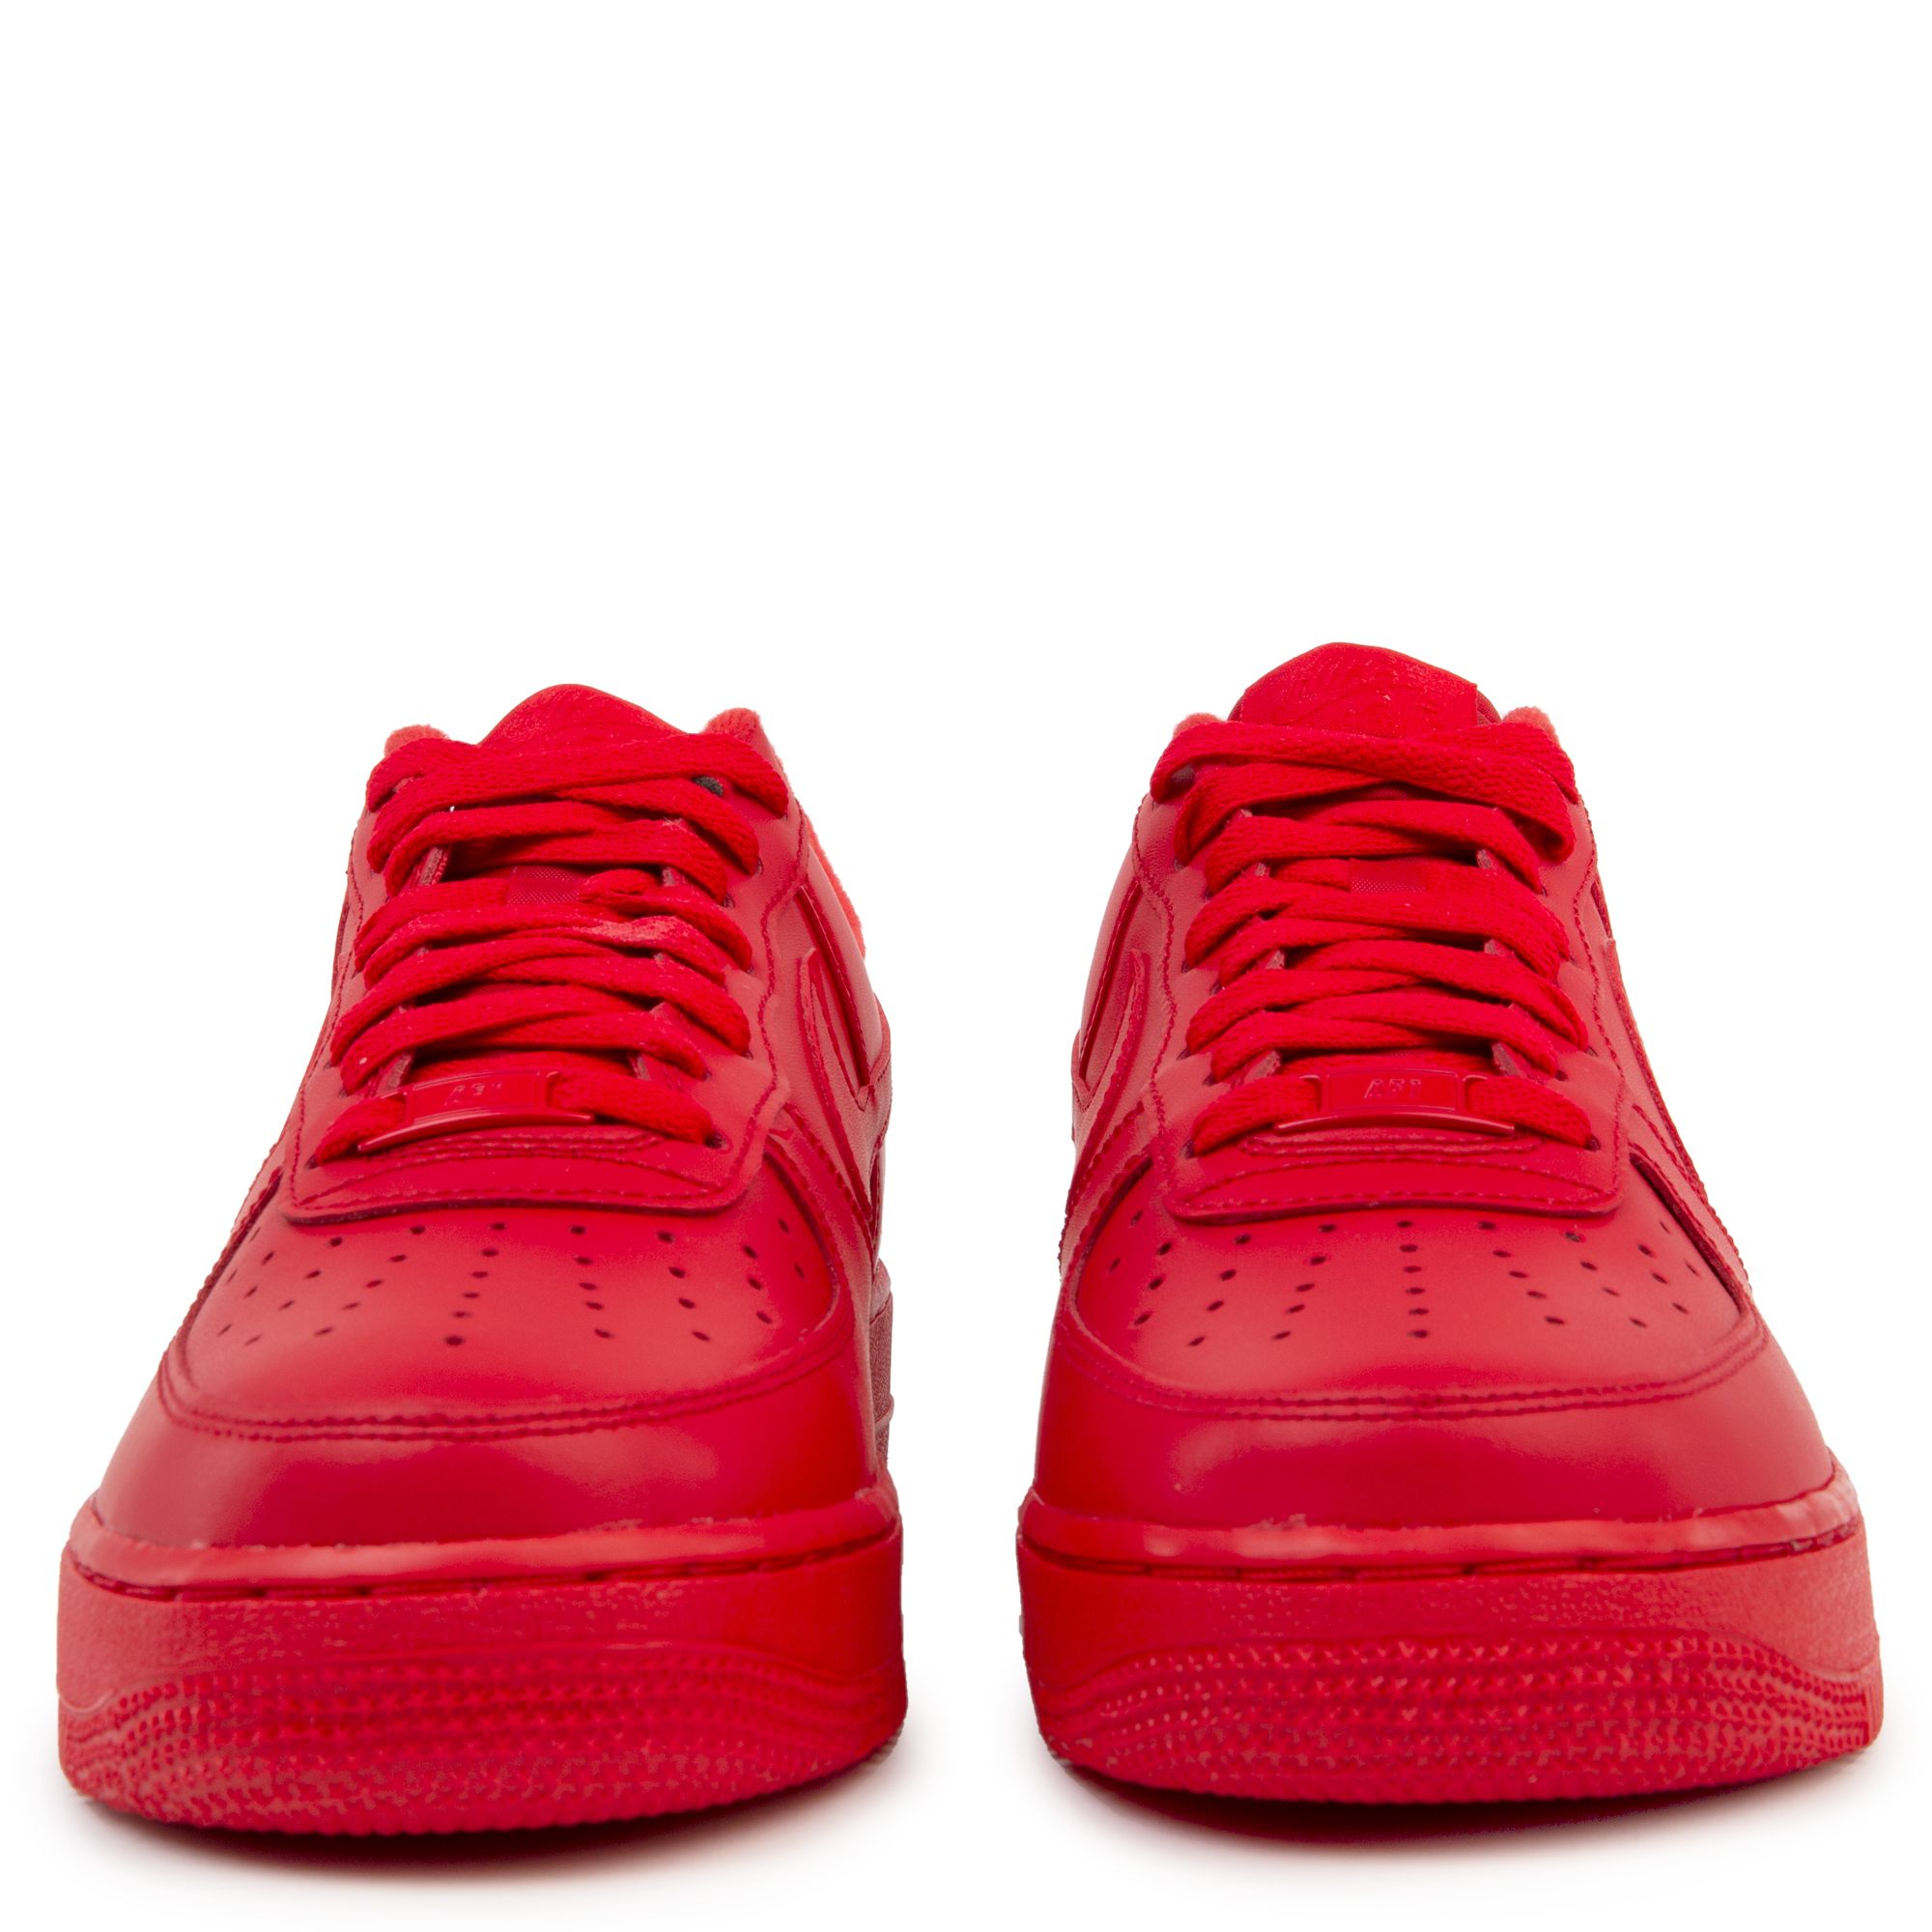 Nike Air Force 1 '07 Low LV8 Americana White/University Red/Deep Royal  Men's Shoe